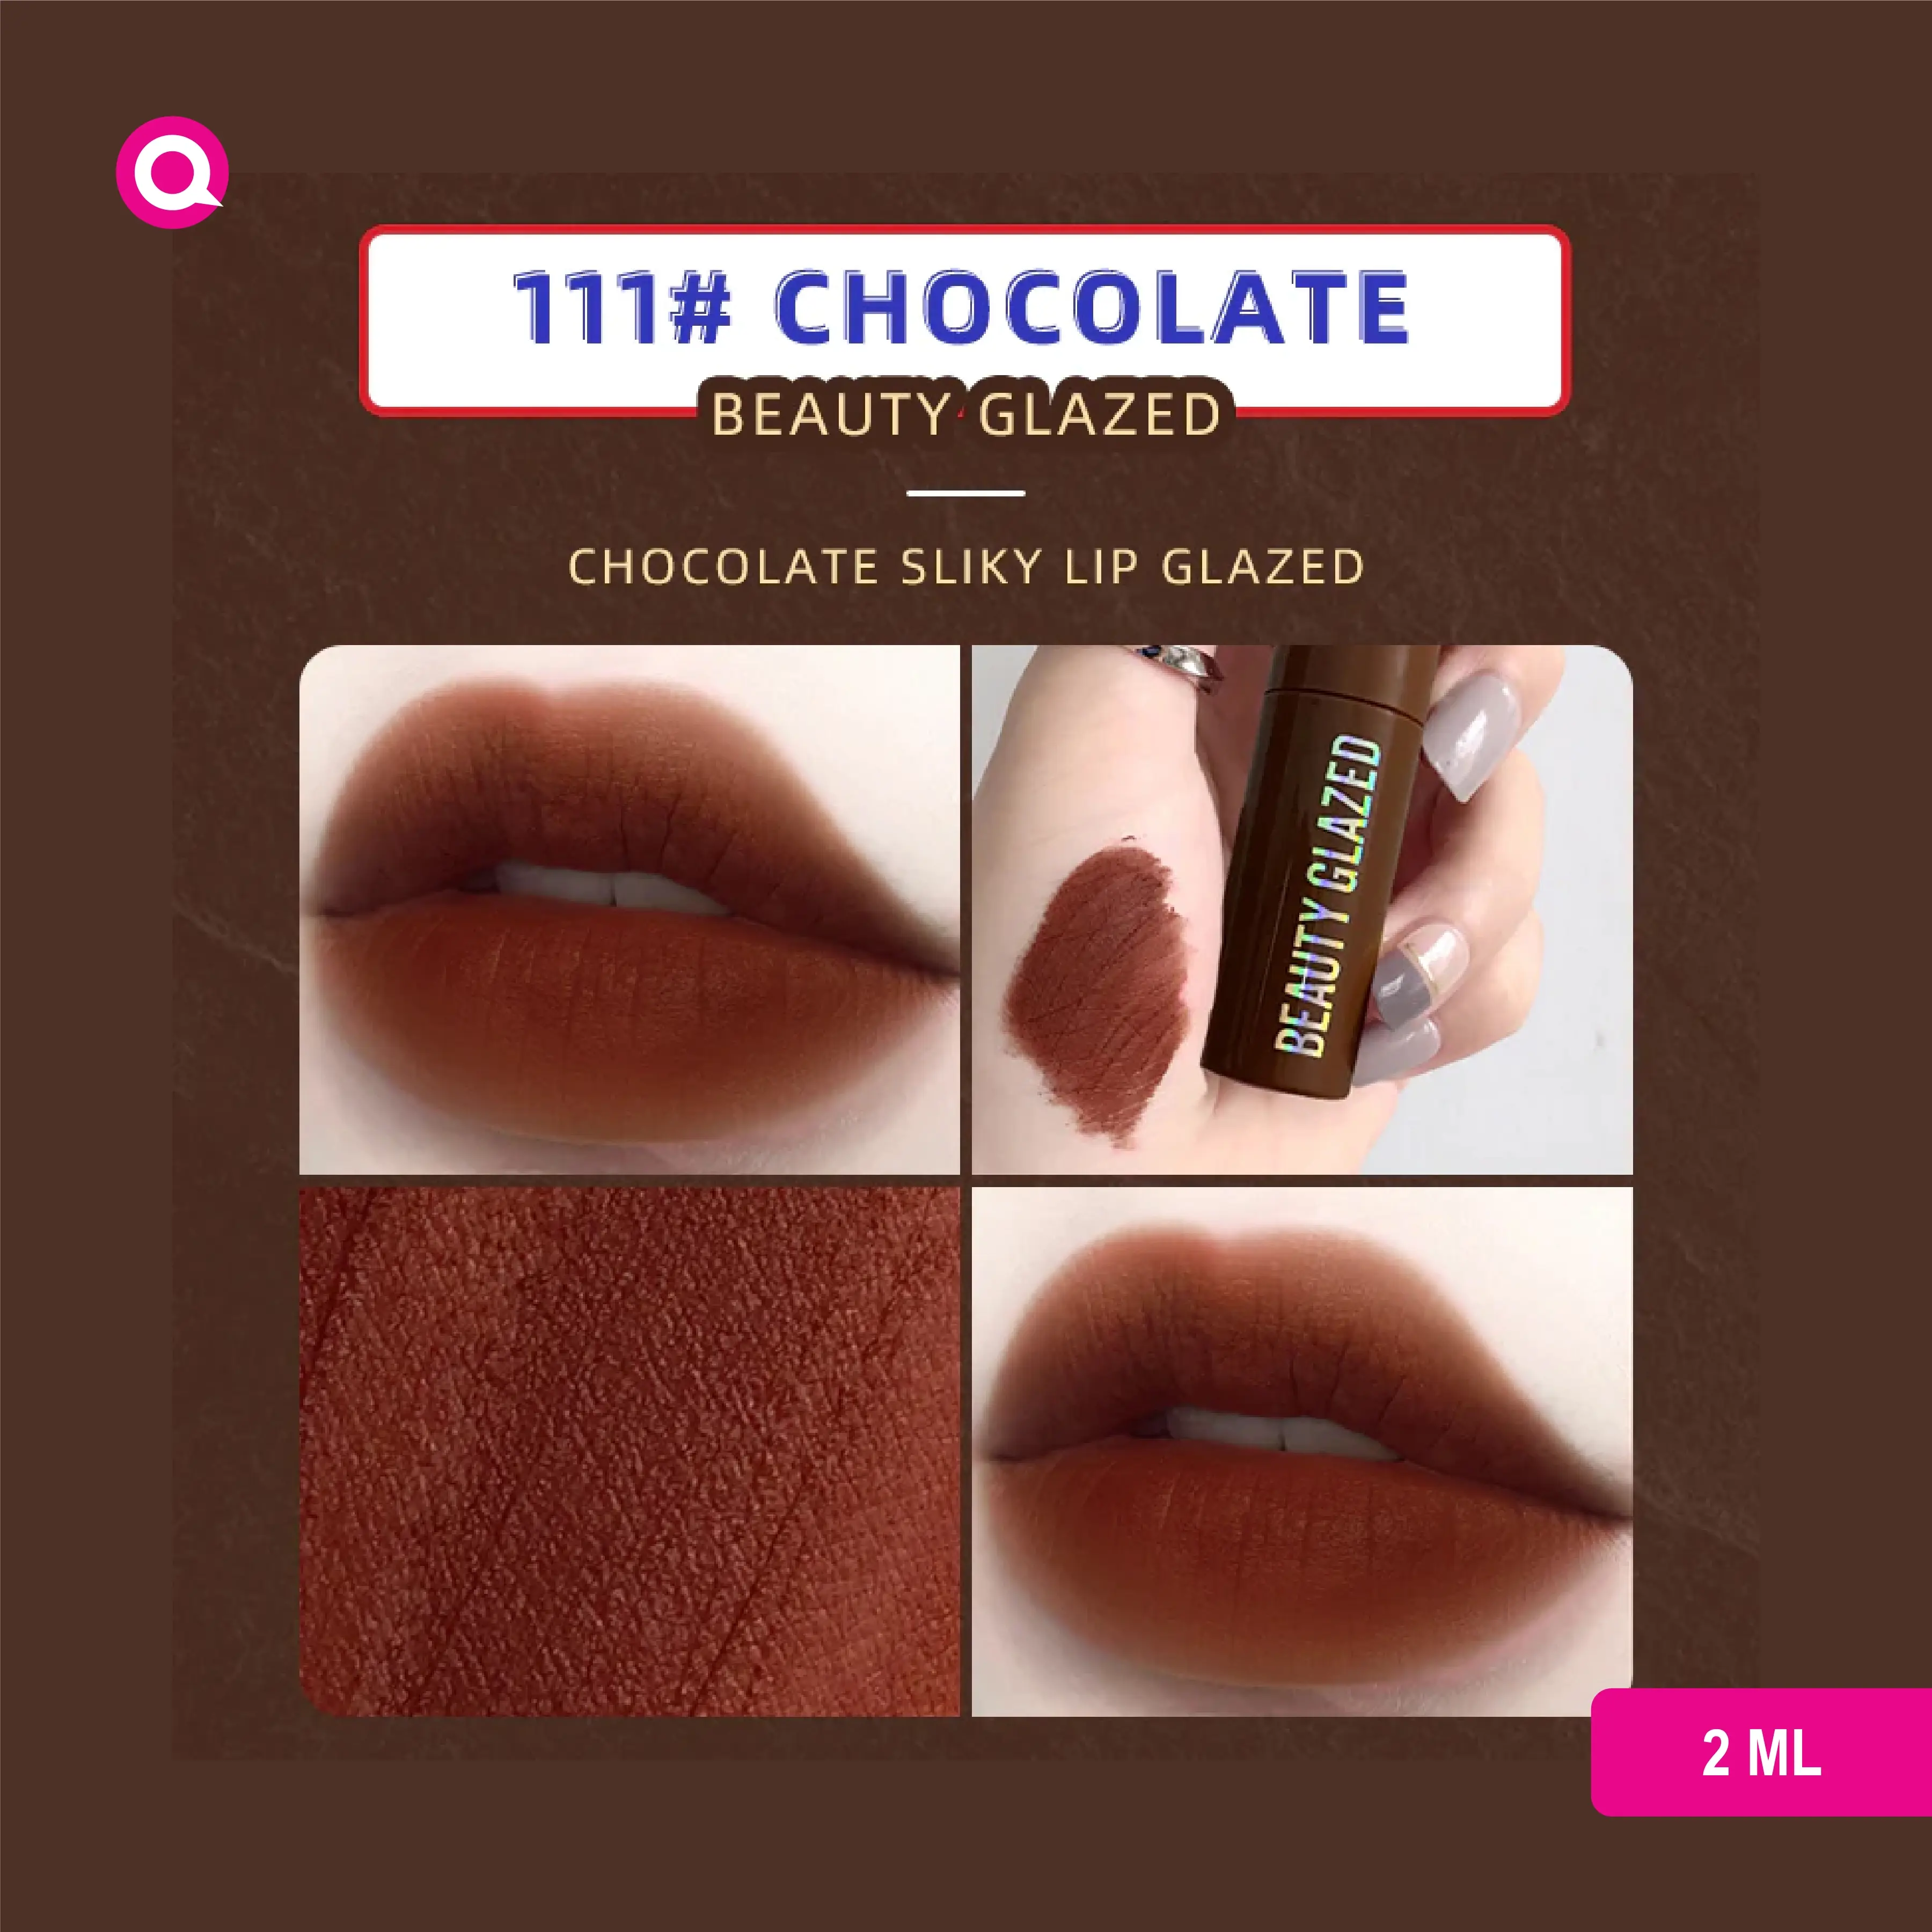 Beauty Glazed Luminous Parade Chocolate Silky Lip Glaze – Chocolate-111